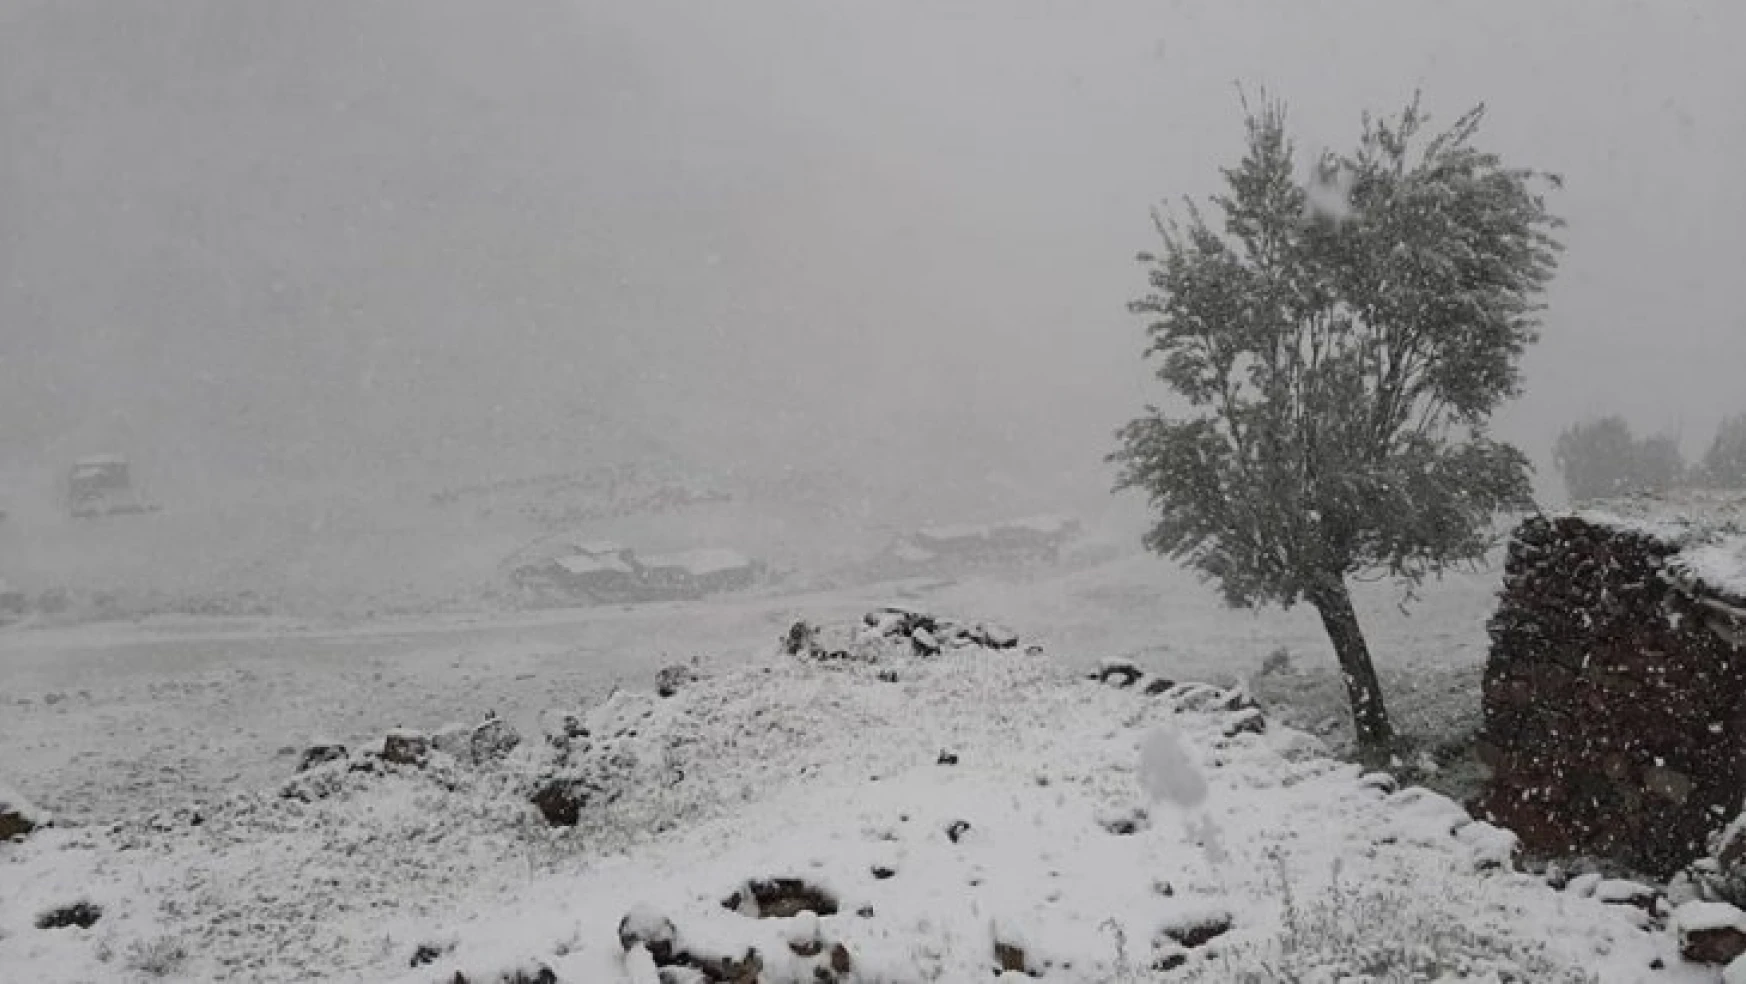 Malatya'da Mayıs ayında kar sürprizi